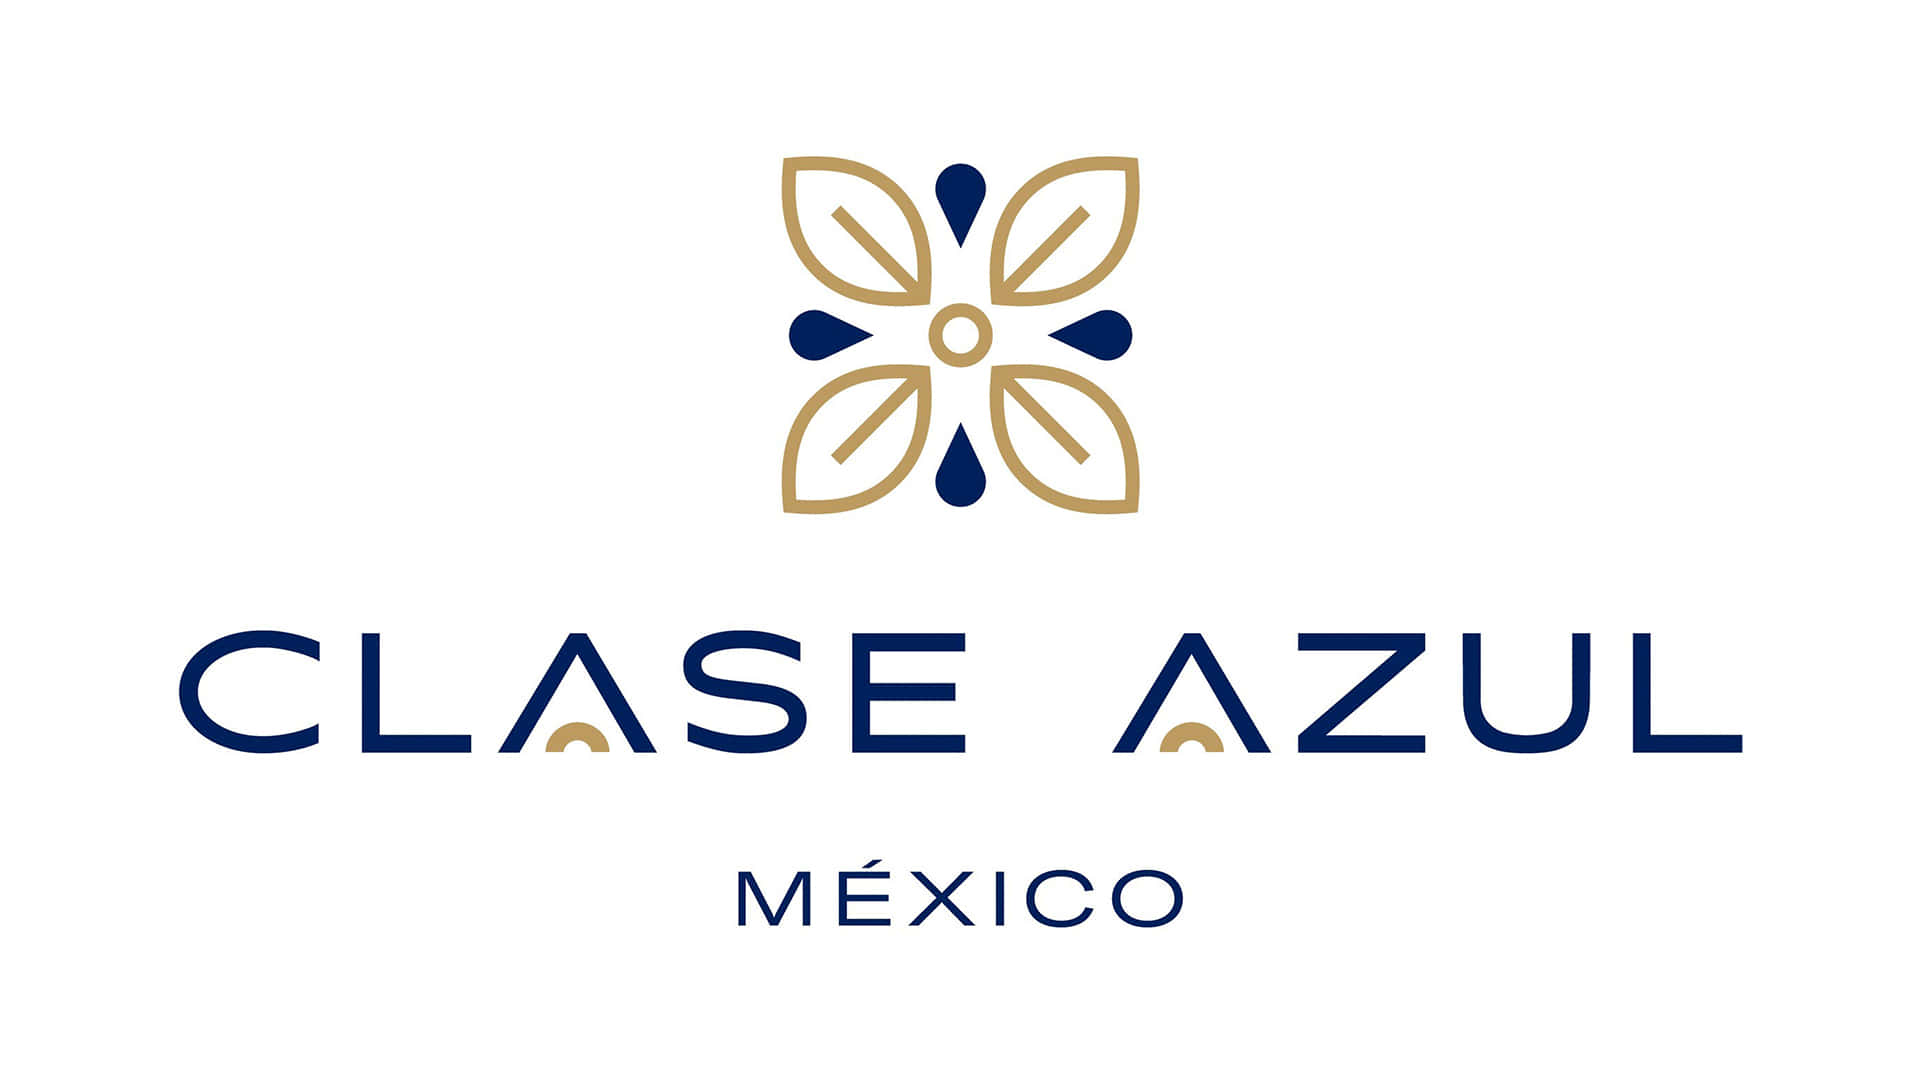 Claseazul Brand-logotypen. Wallpaper